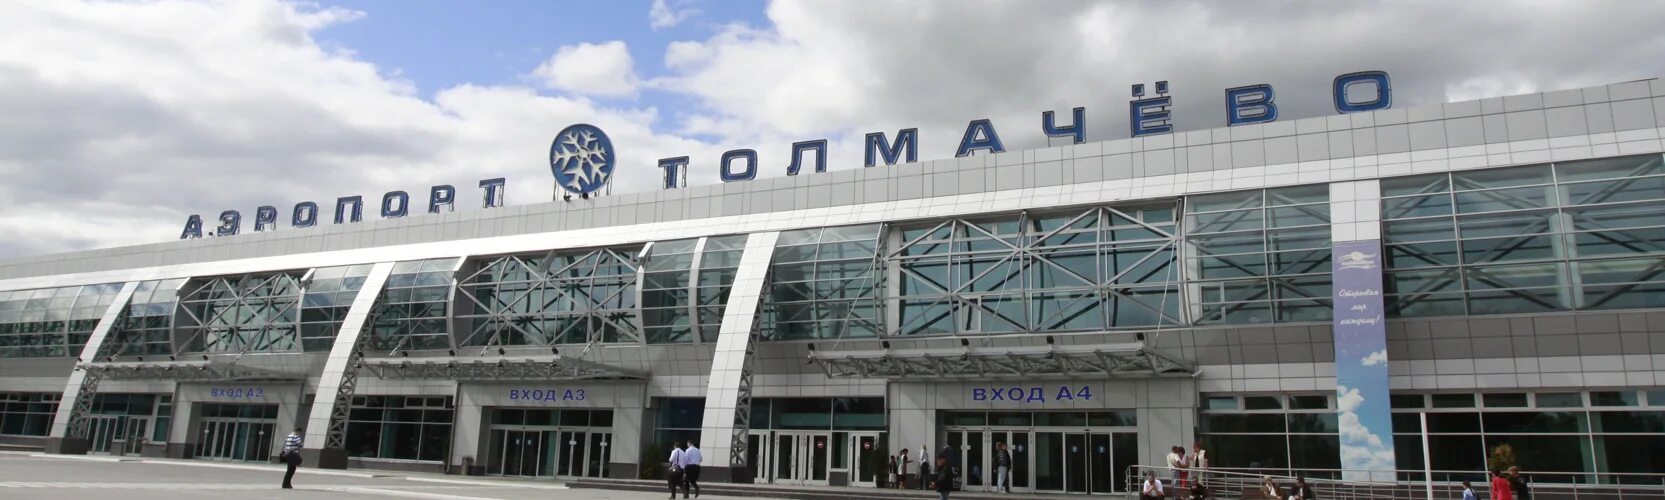 Автобус аэропорт толмачево жд вокзал новосибирск. Аэропорт Толмачево Новосибирск. Аэропорт Толмачево 2000 год. Автовокзал Толмачево Новосибирск. Толмачево ЖД вокзал Новосибирск.